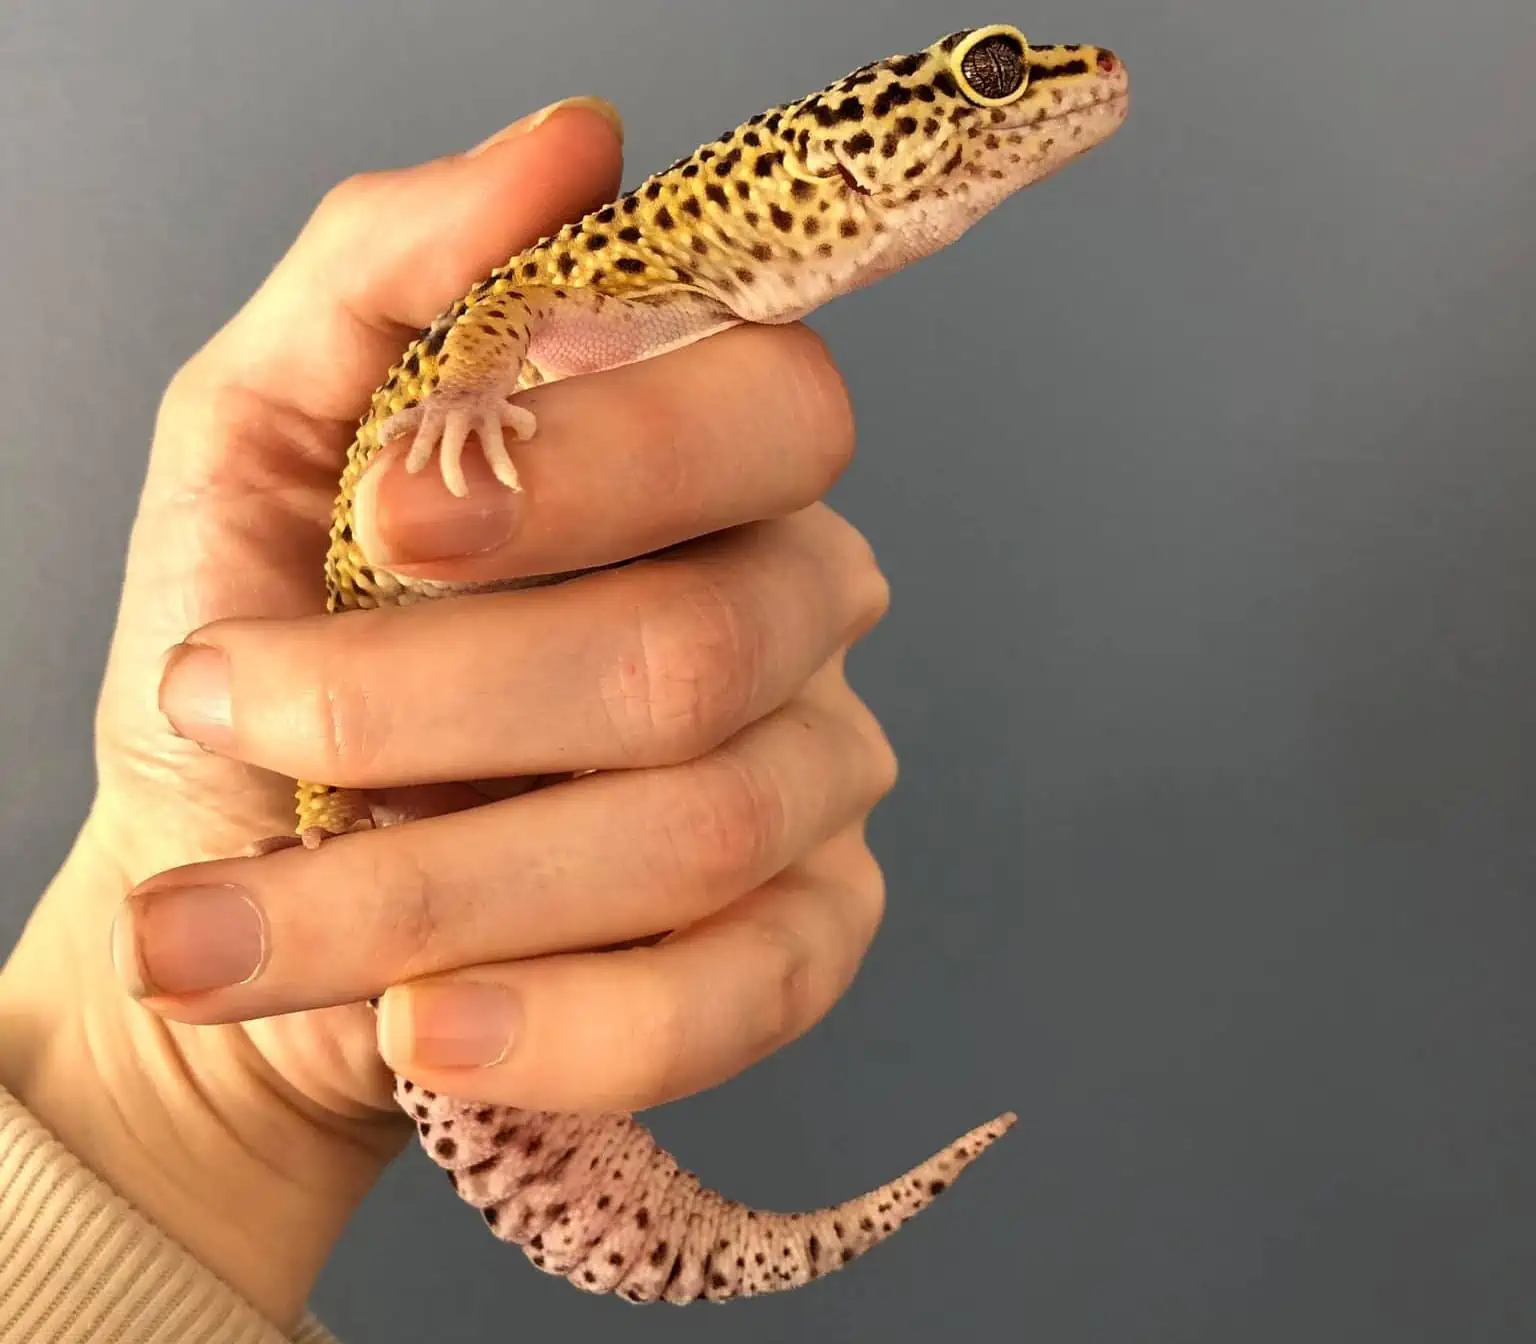 Why Do Leopard Geckos Squeak